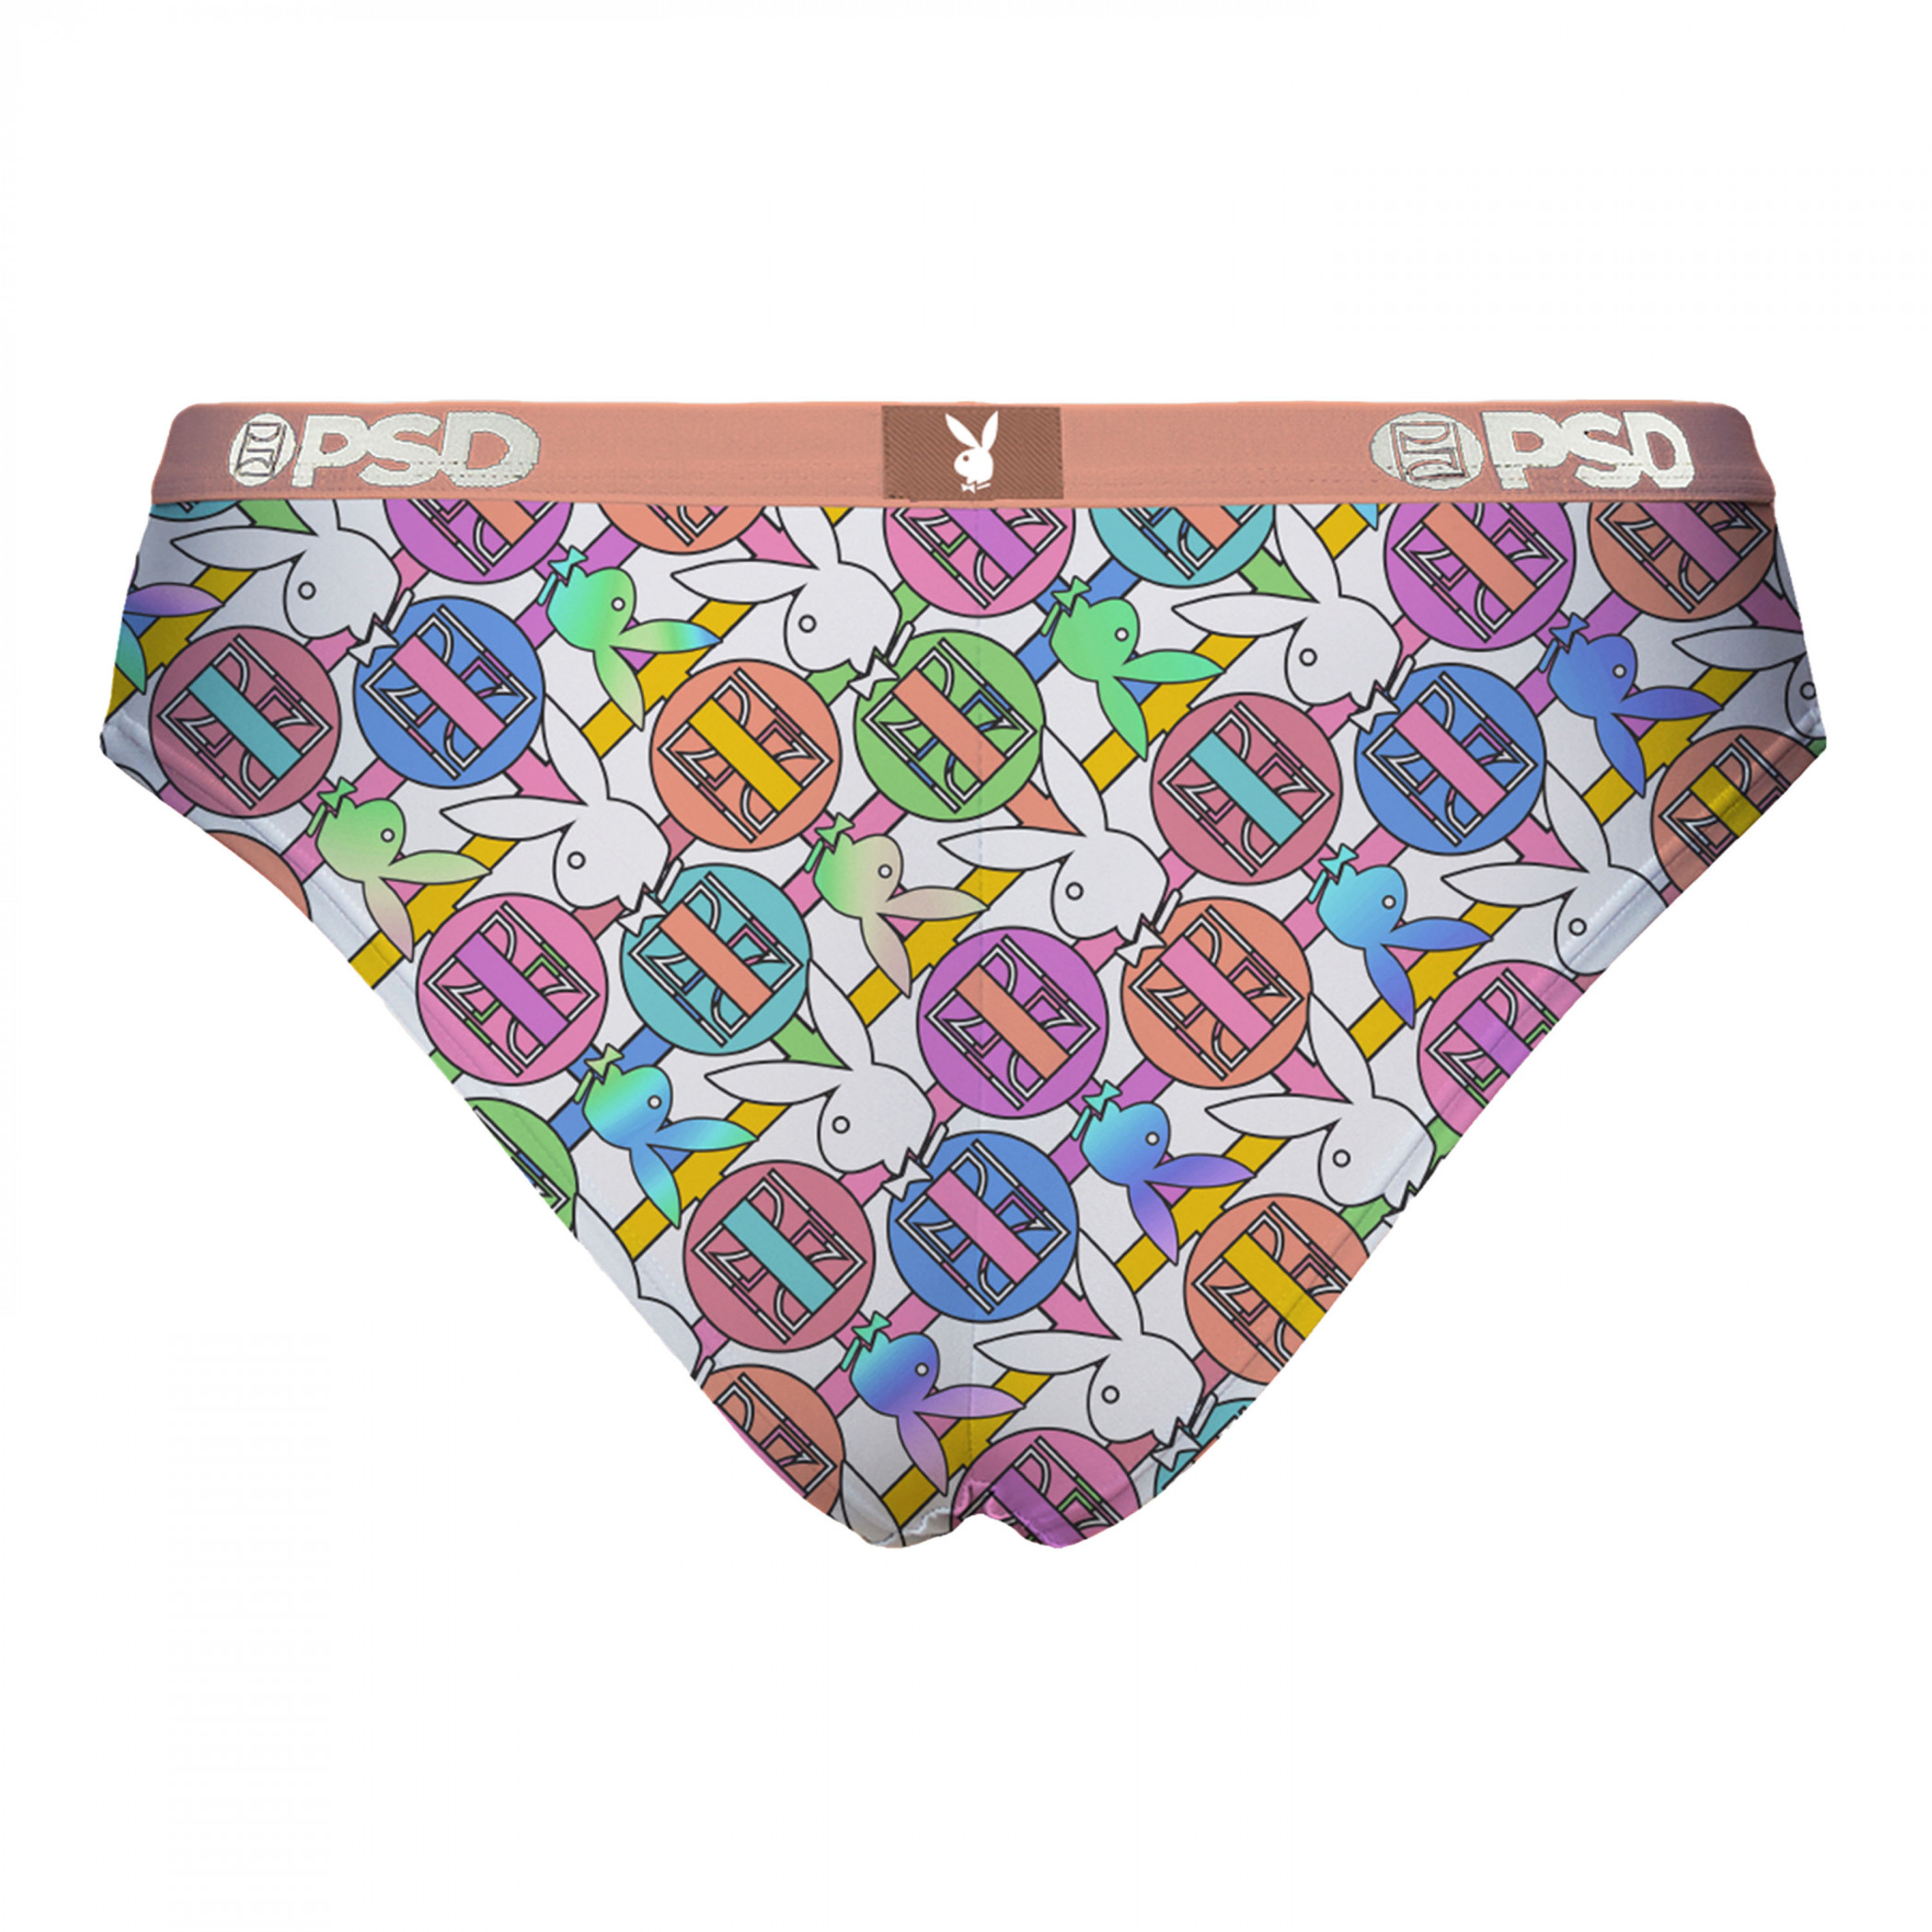 Playboy Neon Logos PSD Cheeky Underwear